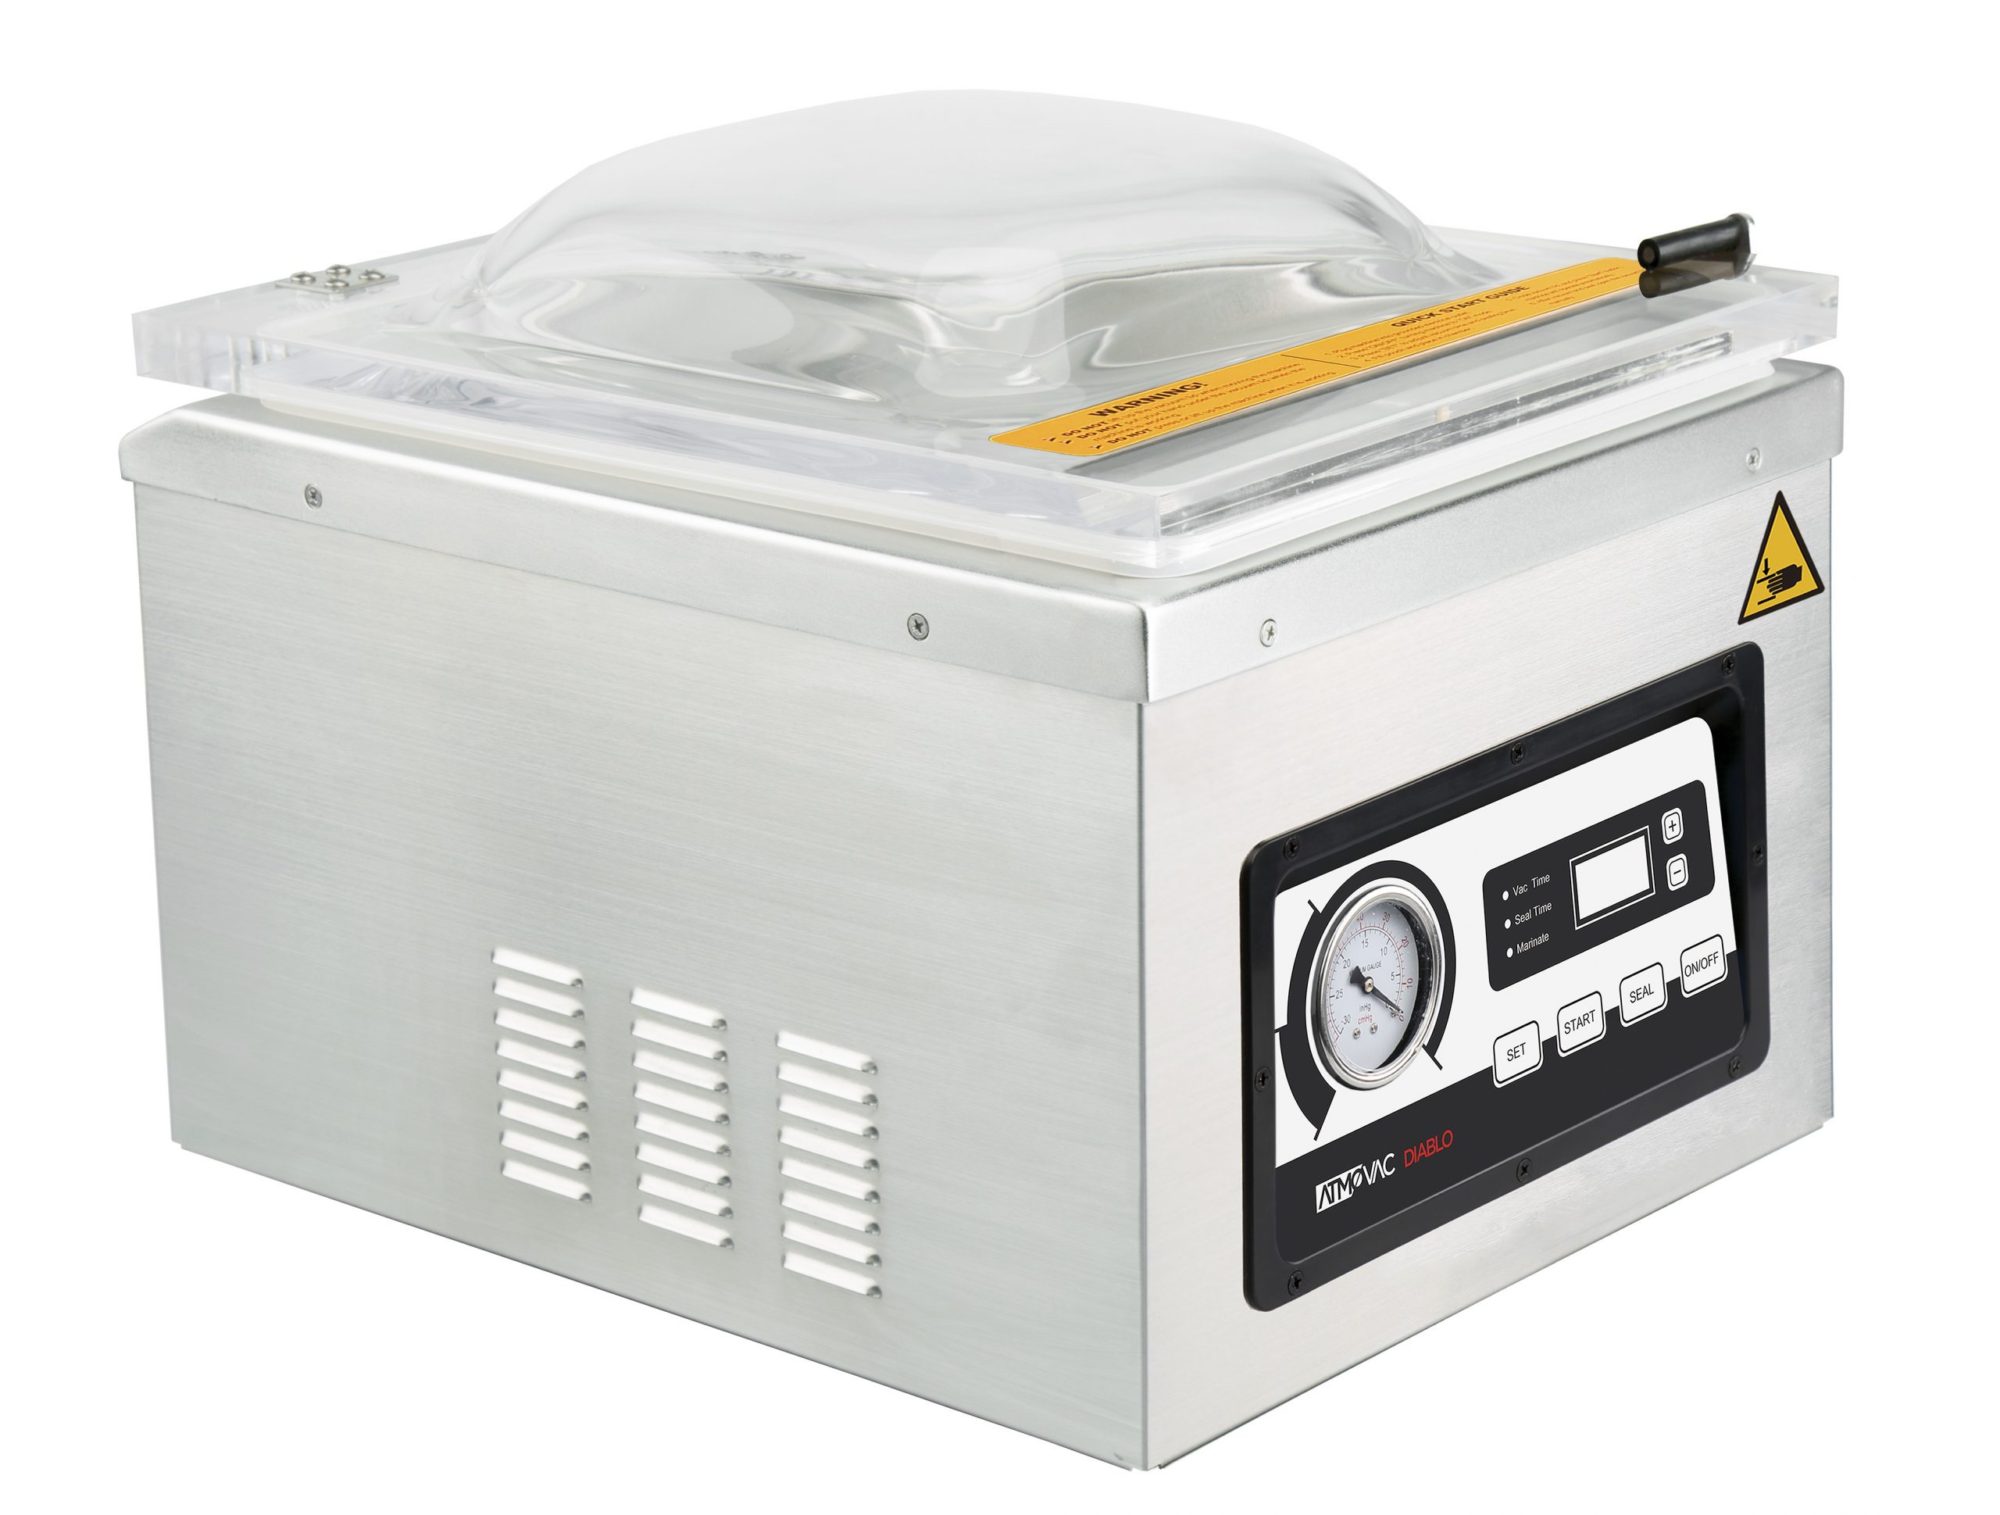 Eurodib Counter Top Vacuum Packaging Machine 10" Seal Bar 120V - RGS-DIABLO10